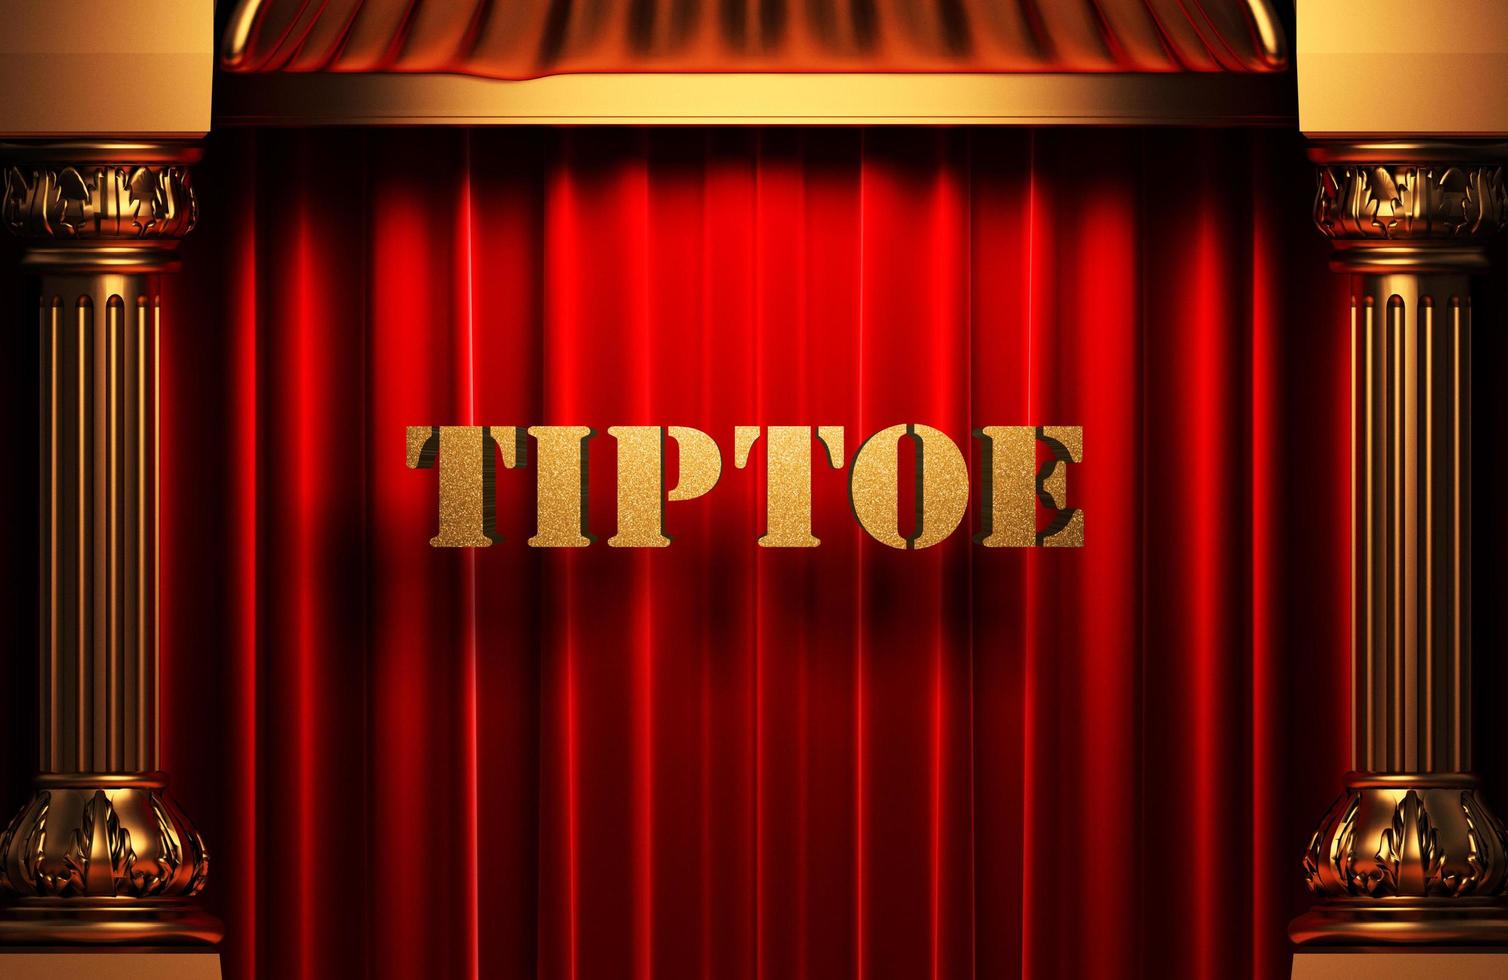 tiptoe golden word on red curtain photo